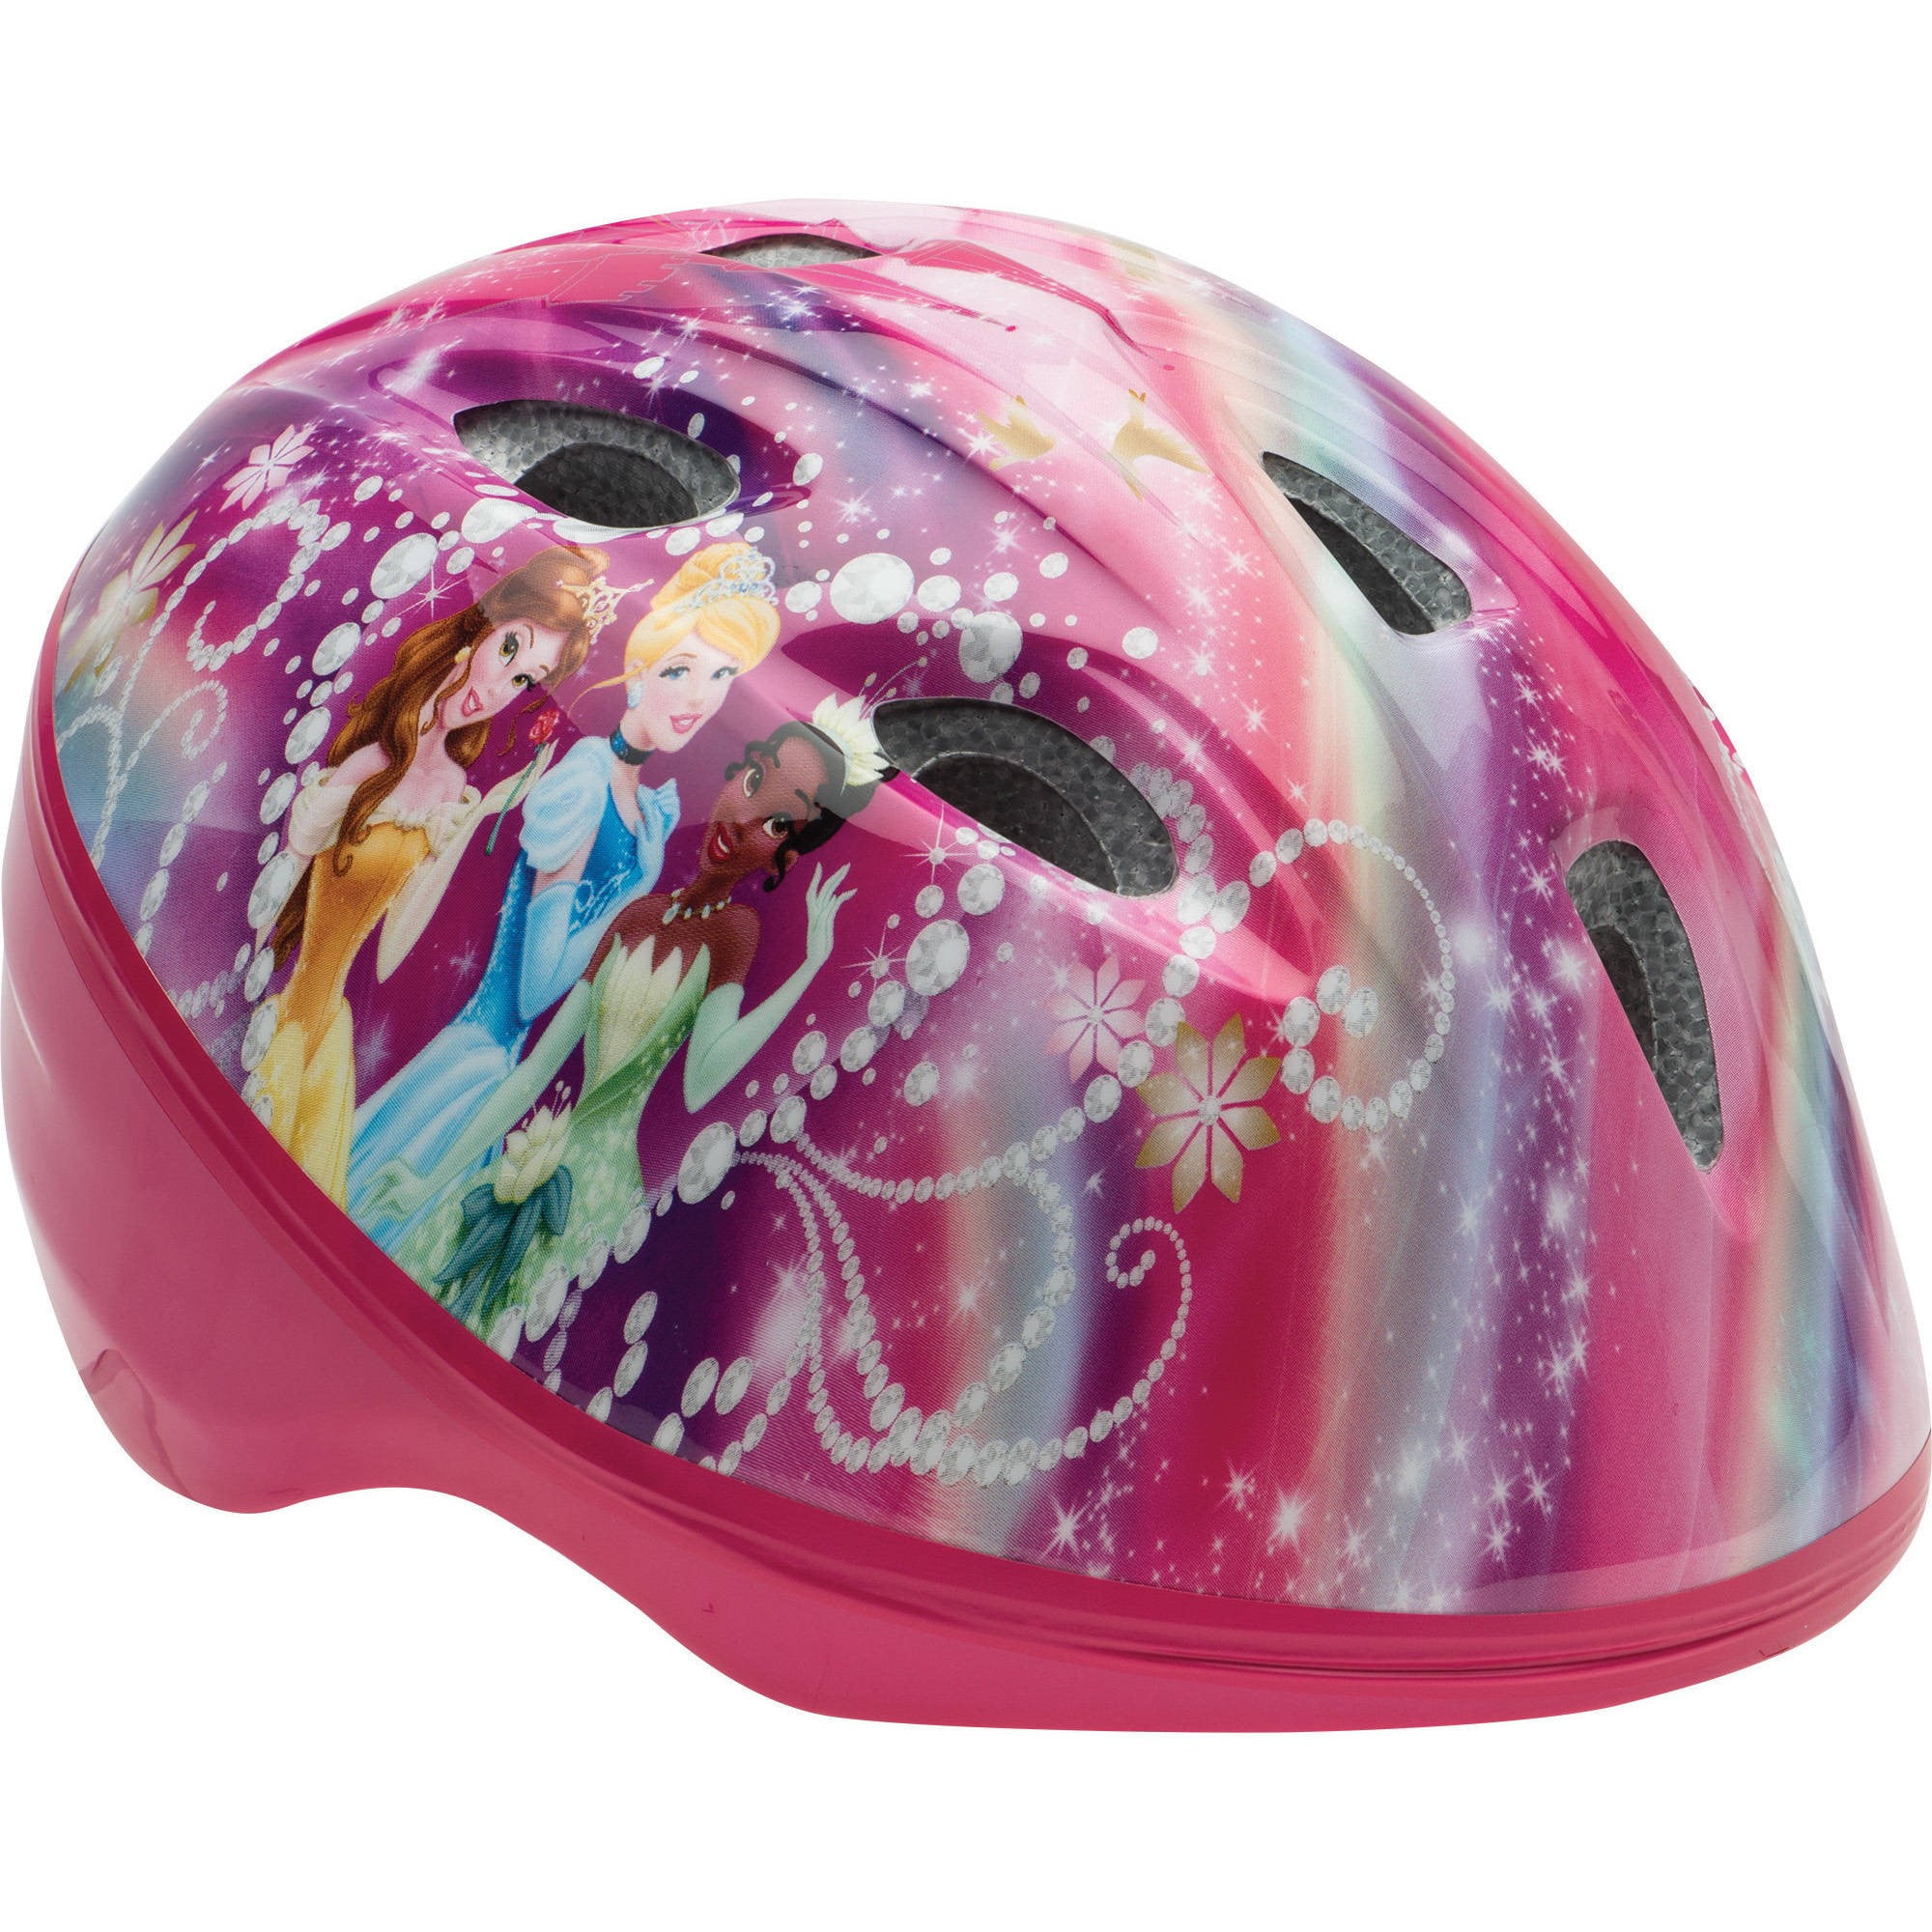 Disney princess girls bike helmet and knee pads multicolor pink trim 